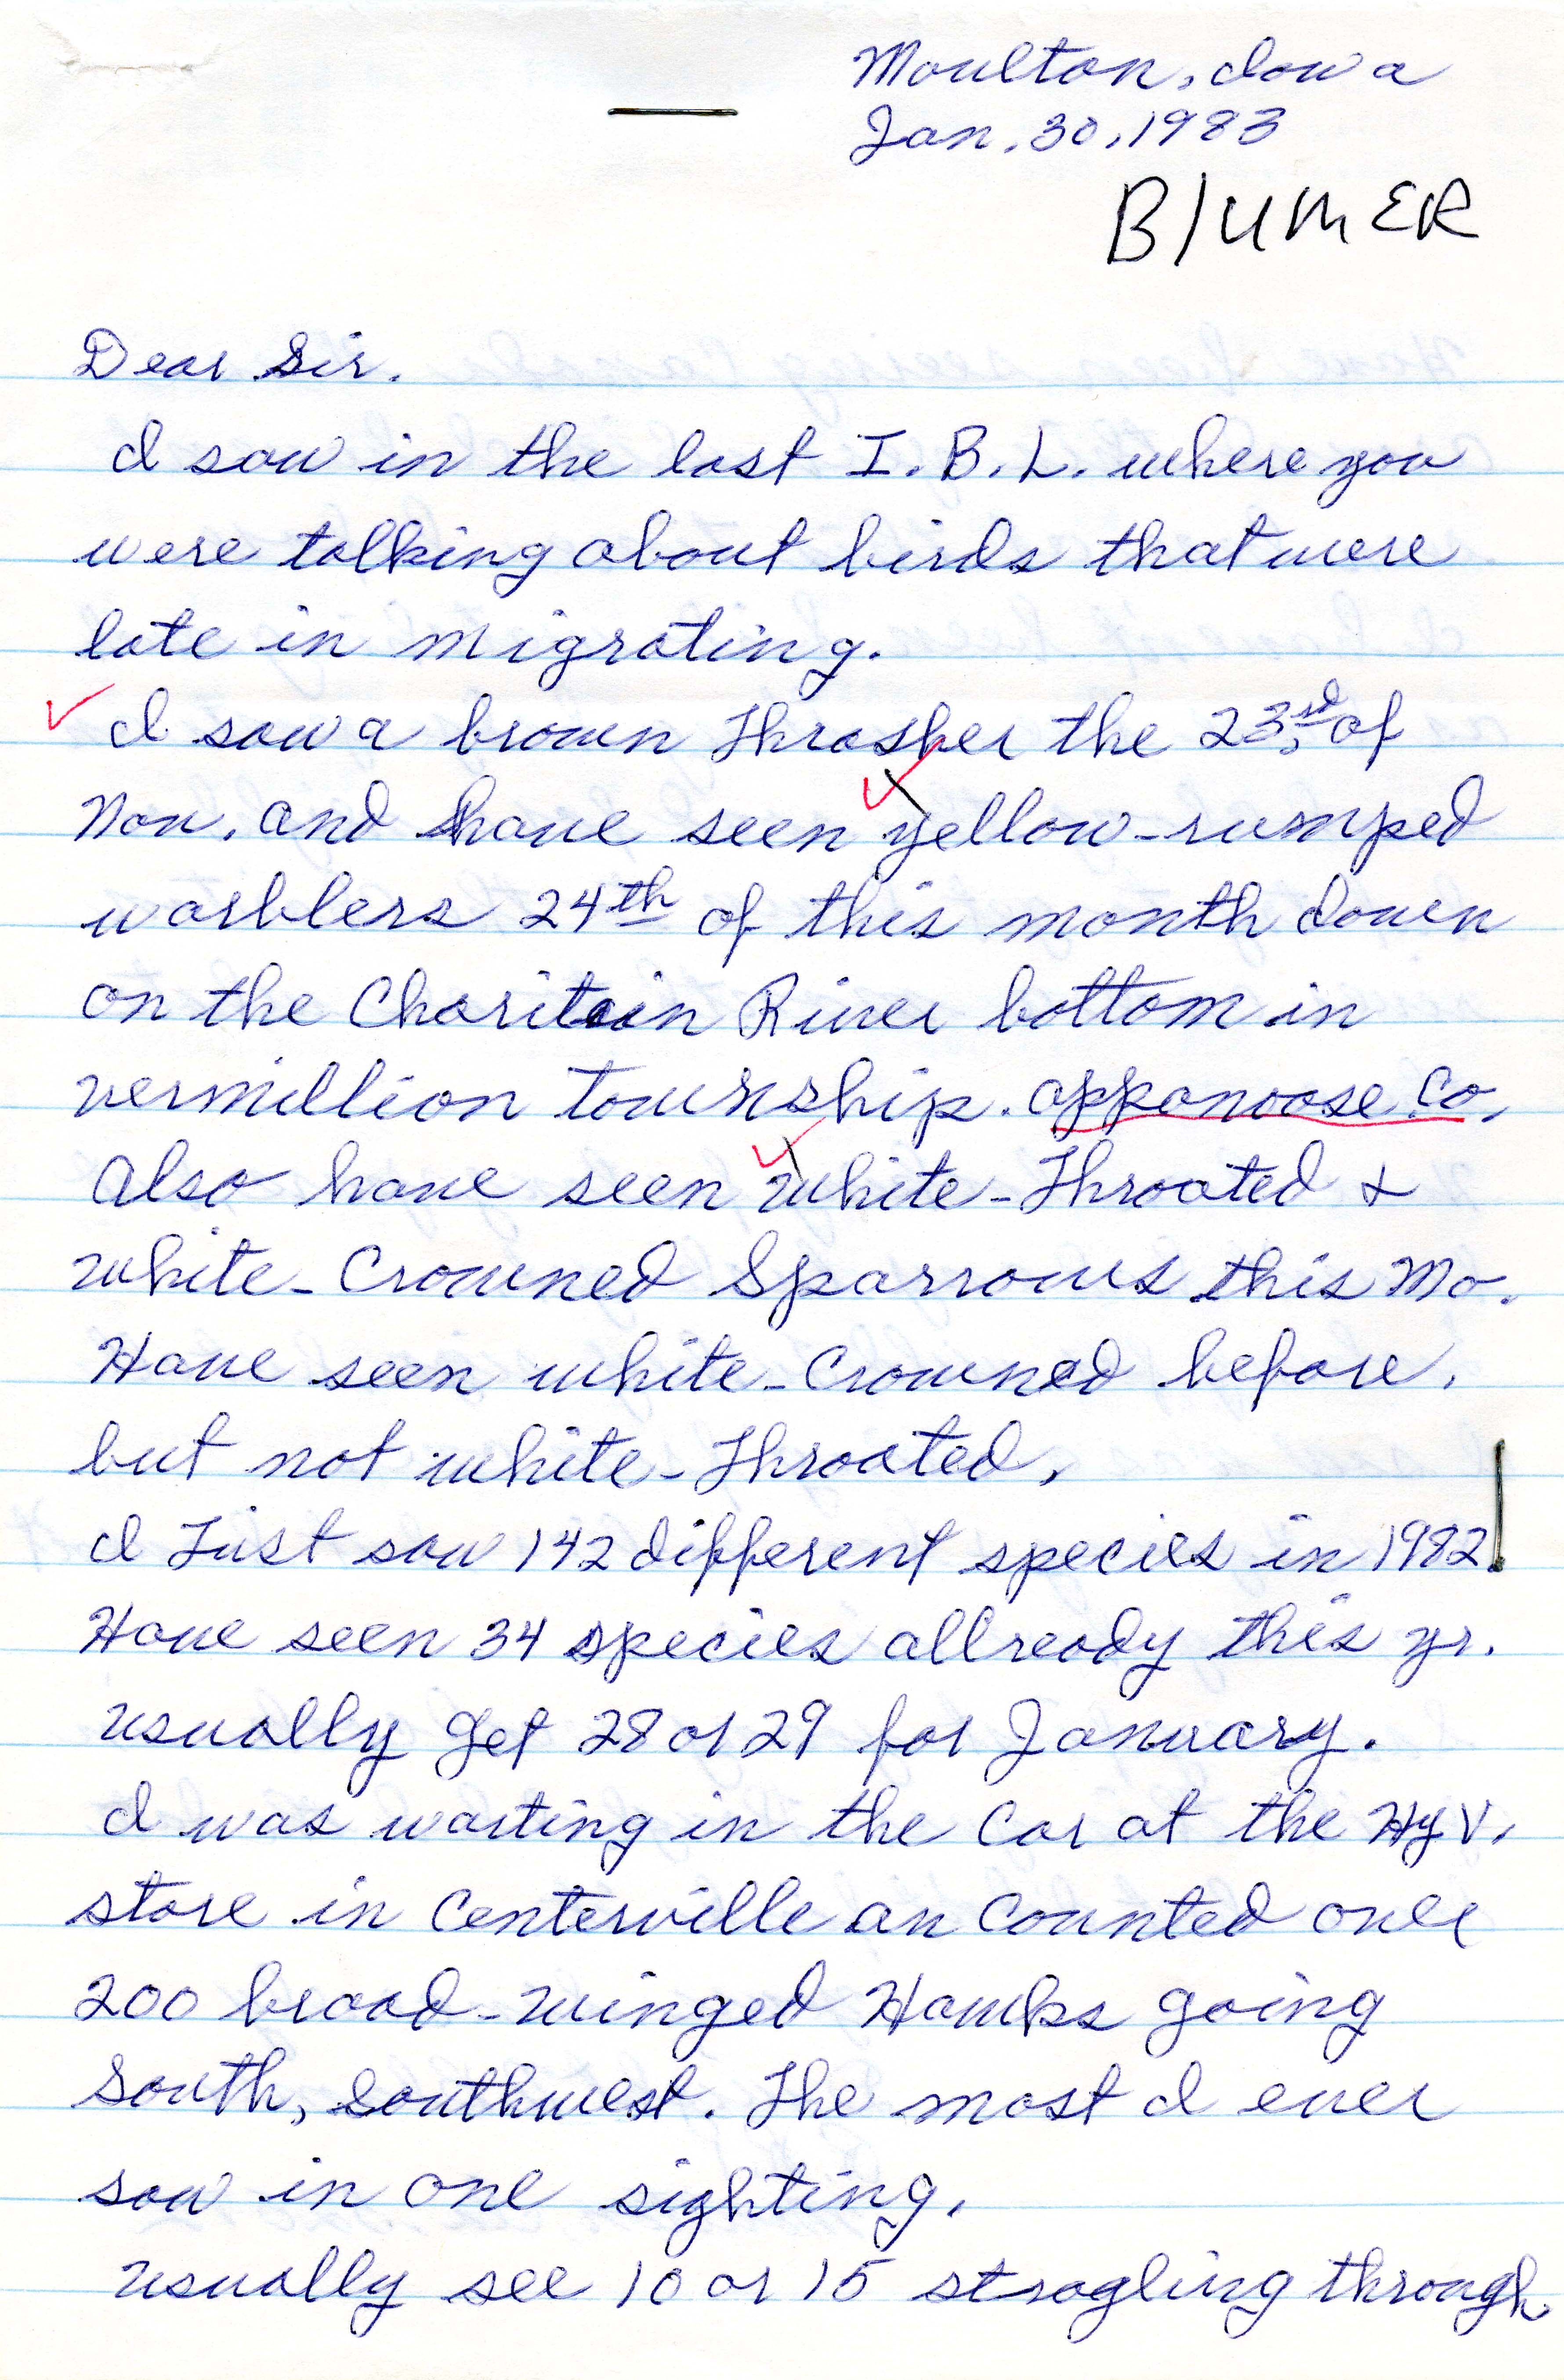 Dwight N. Blumer letter to Thomas H. Kent regarding winter bird sightings, January 30, 1983